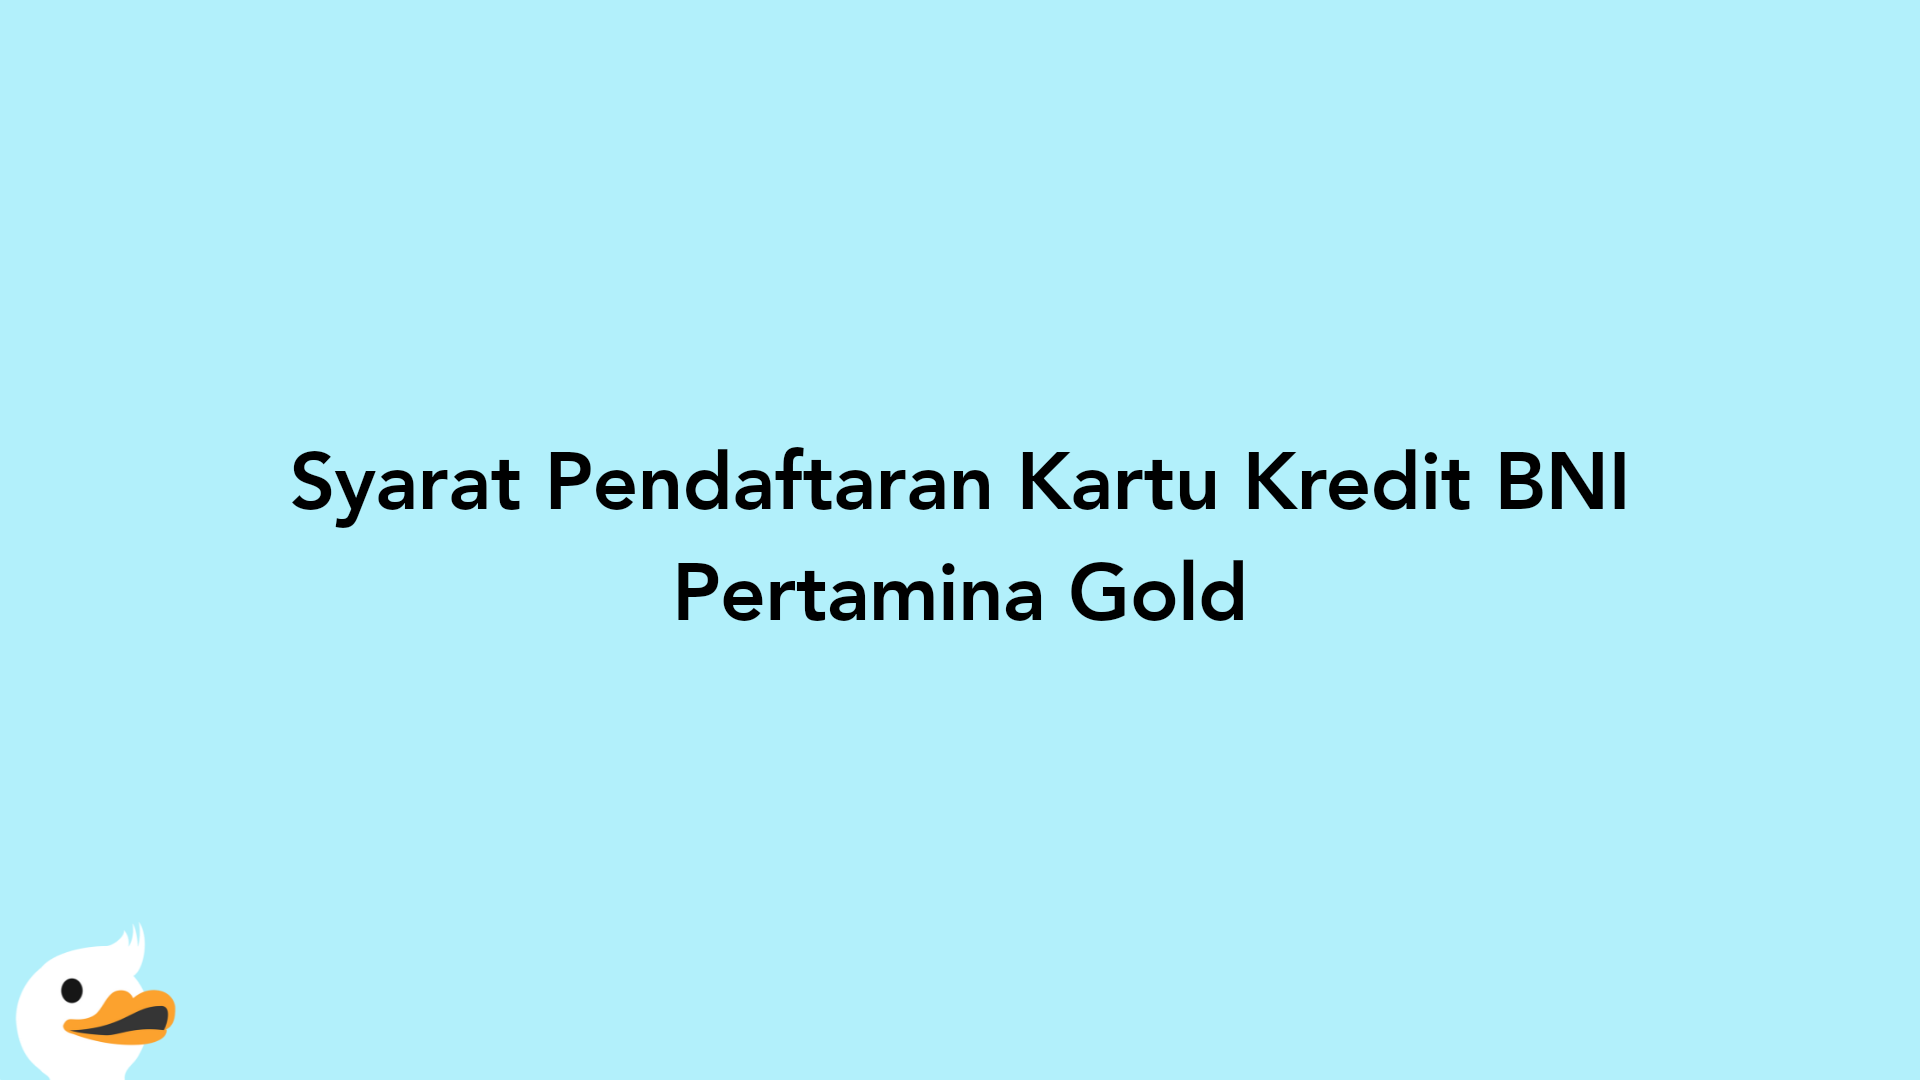 Syarat Pendaftaran Kartu Kredit BNI Pertamina Gold